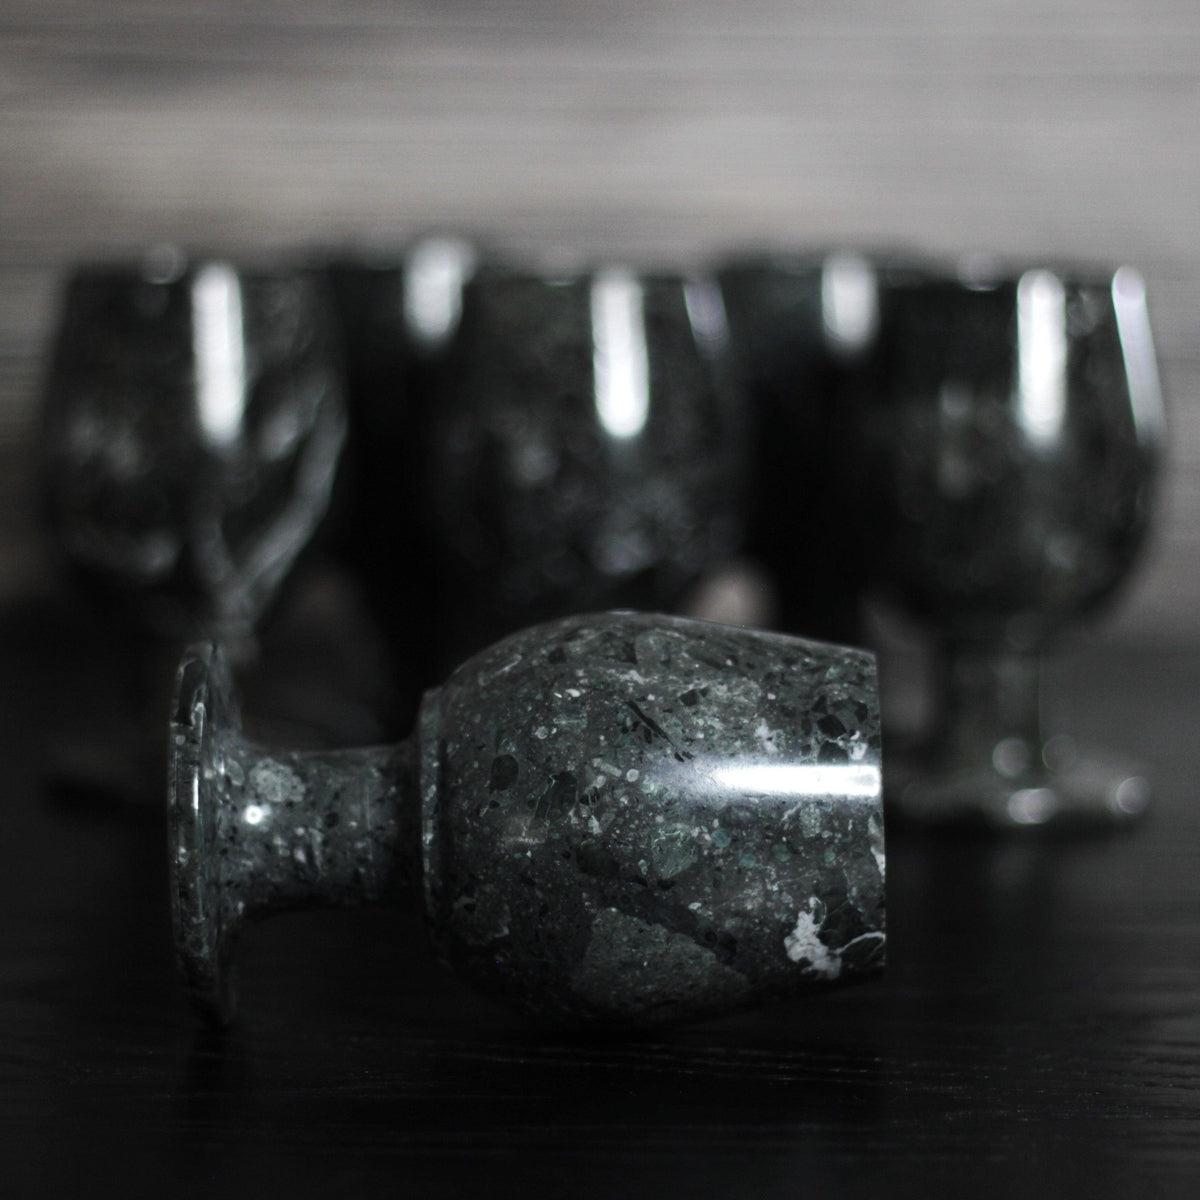 10 oz. Black Onyx Wine Glasses Gift Set - Marble Cultures